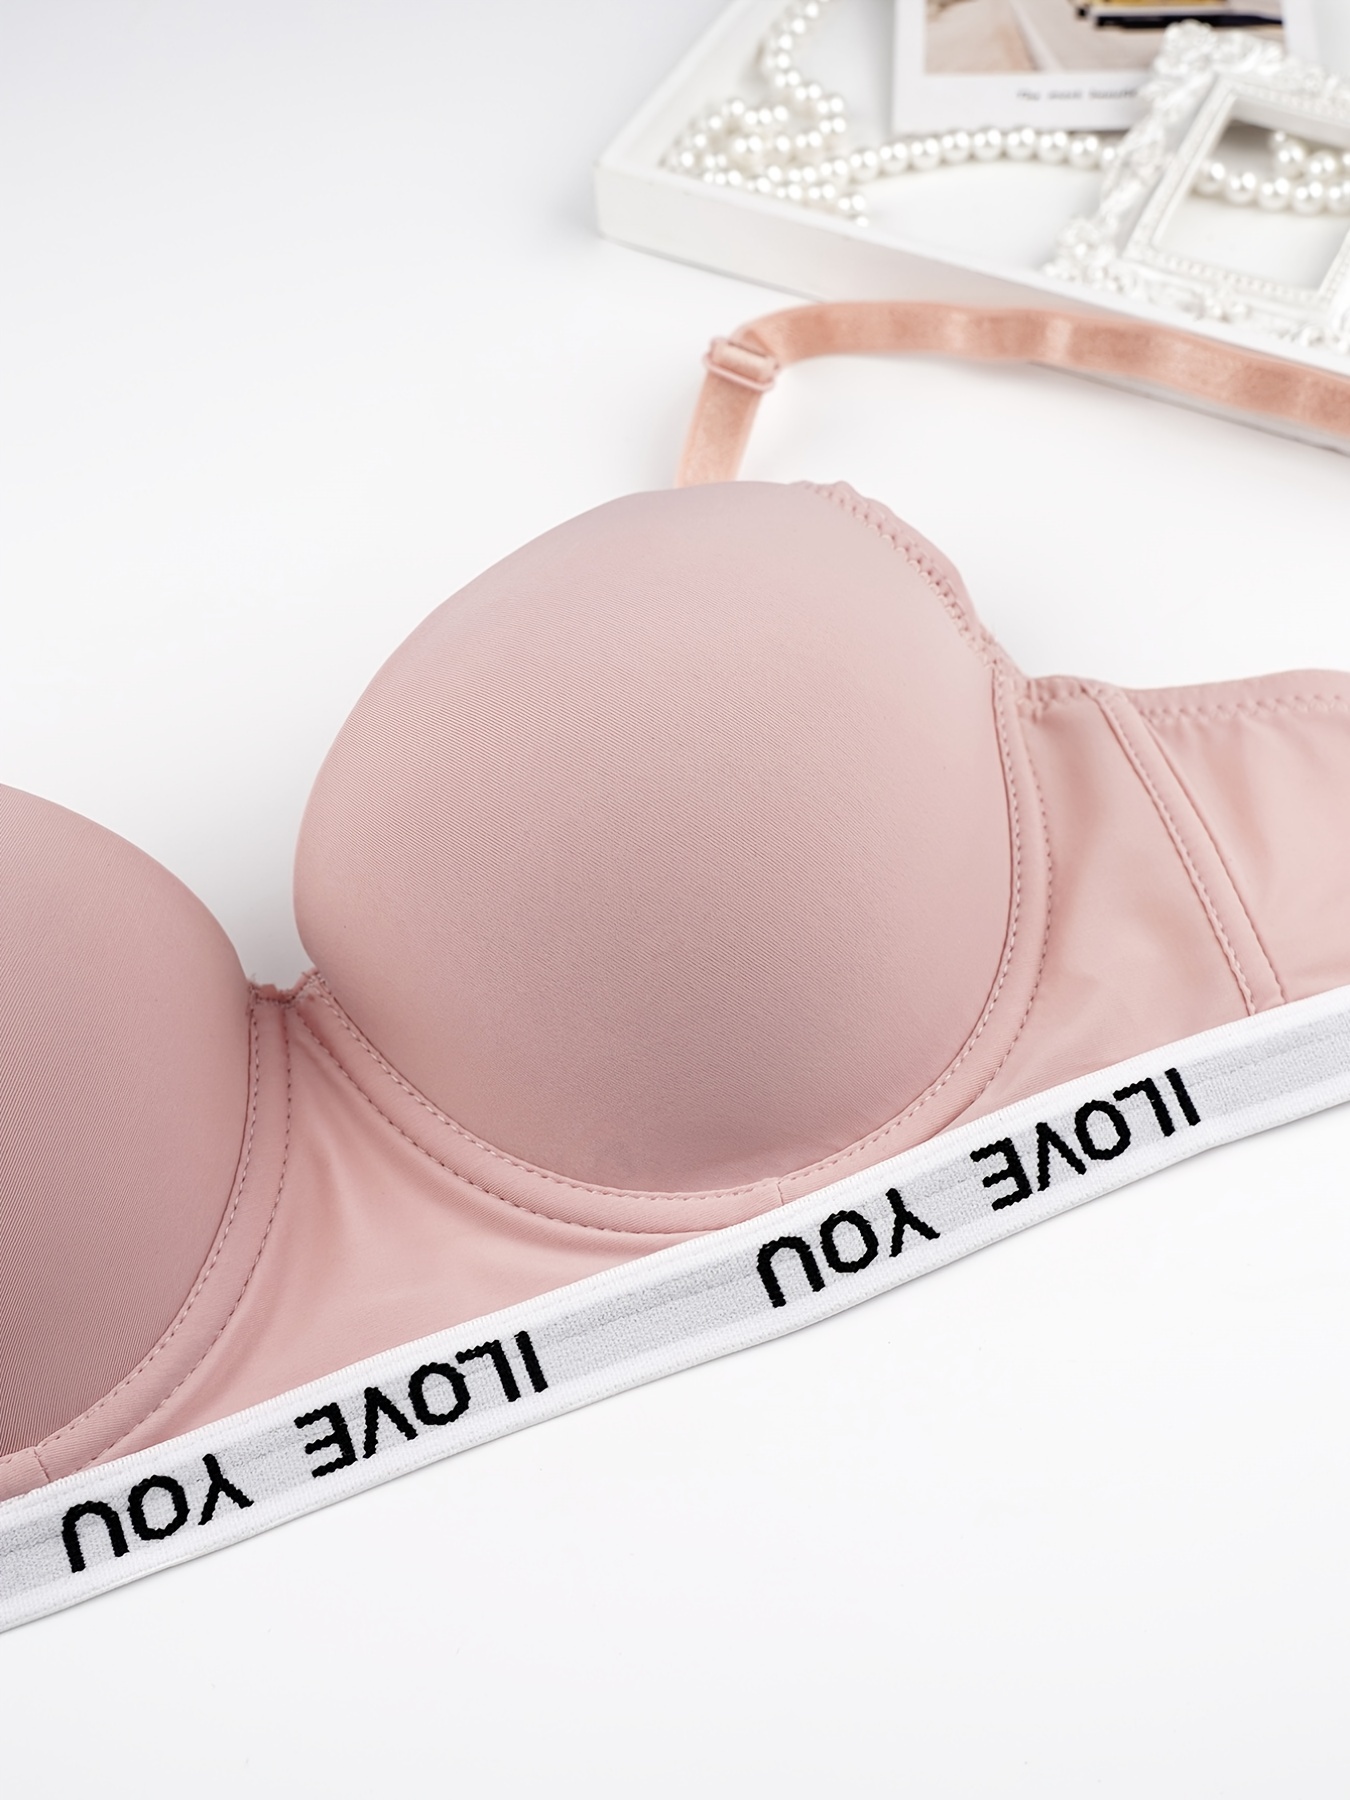 Victoria's Secret Pink Wear Everywhere Wireless Push-Up Bra 34B Nude Solid  